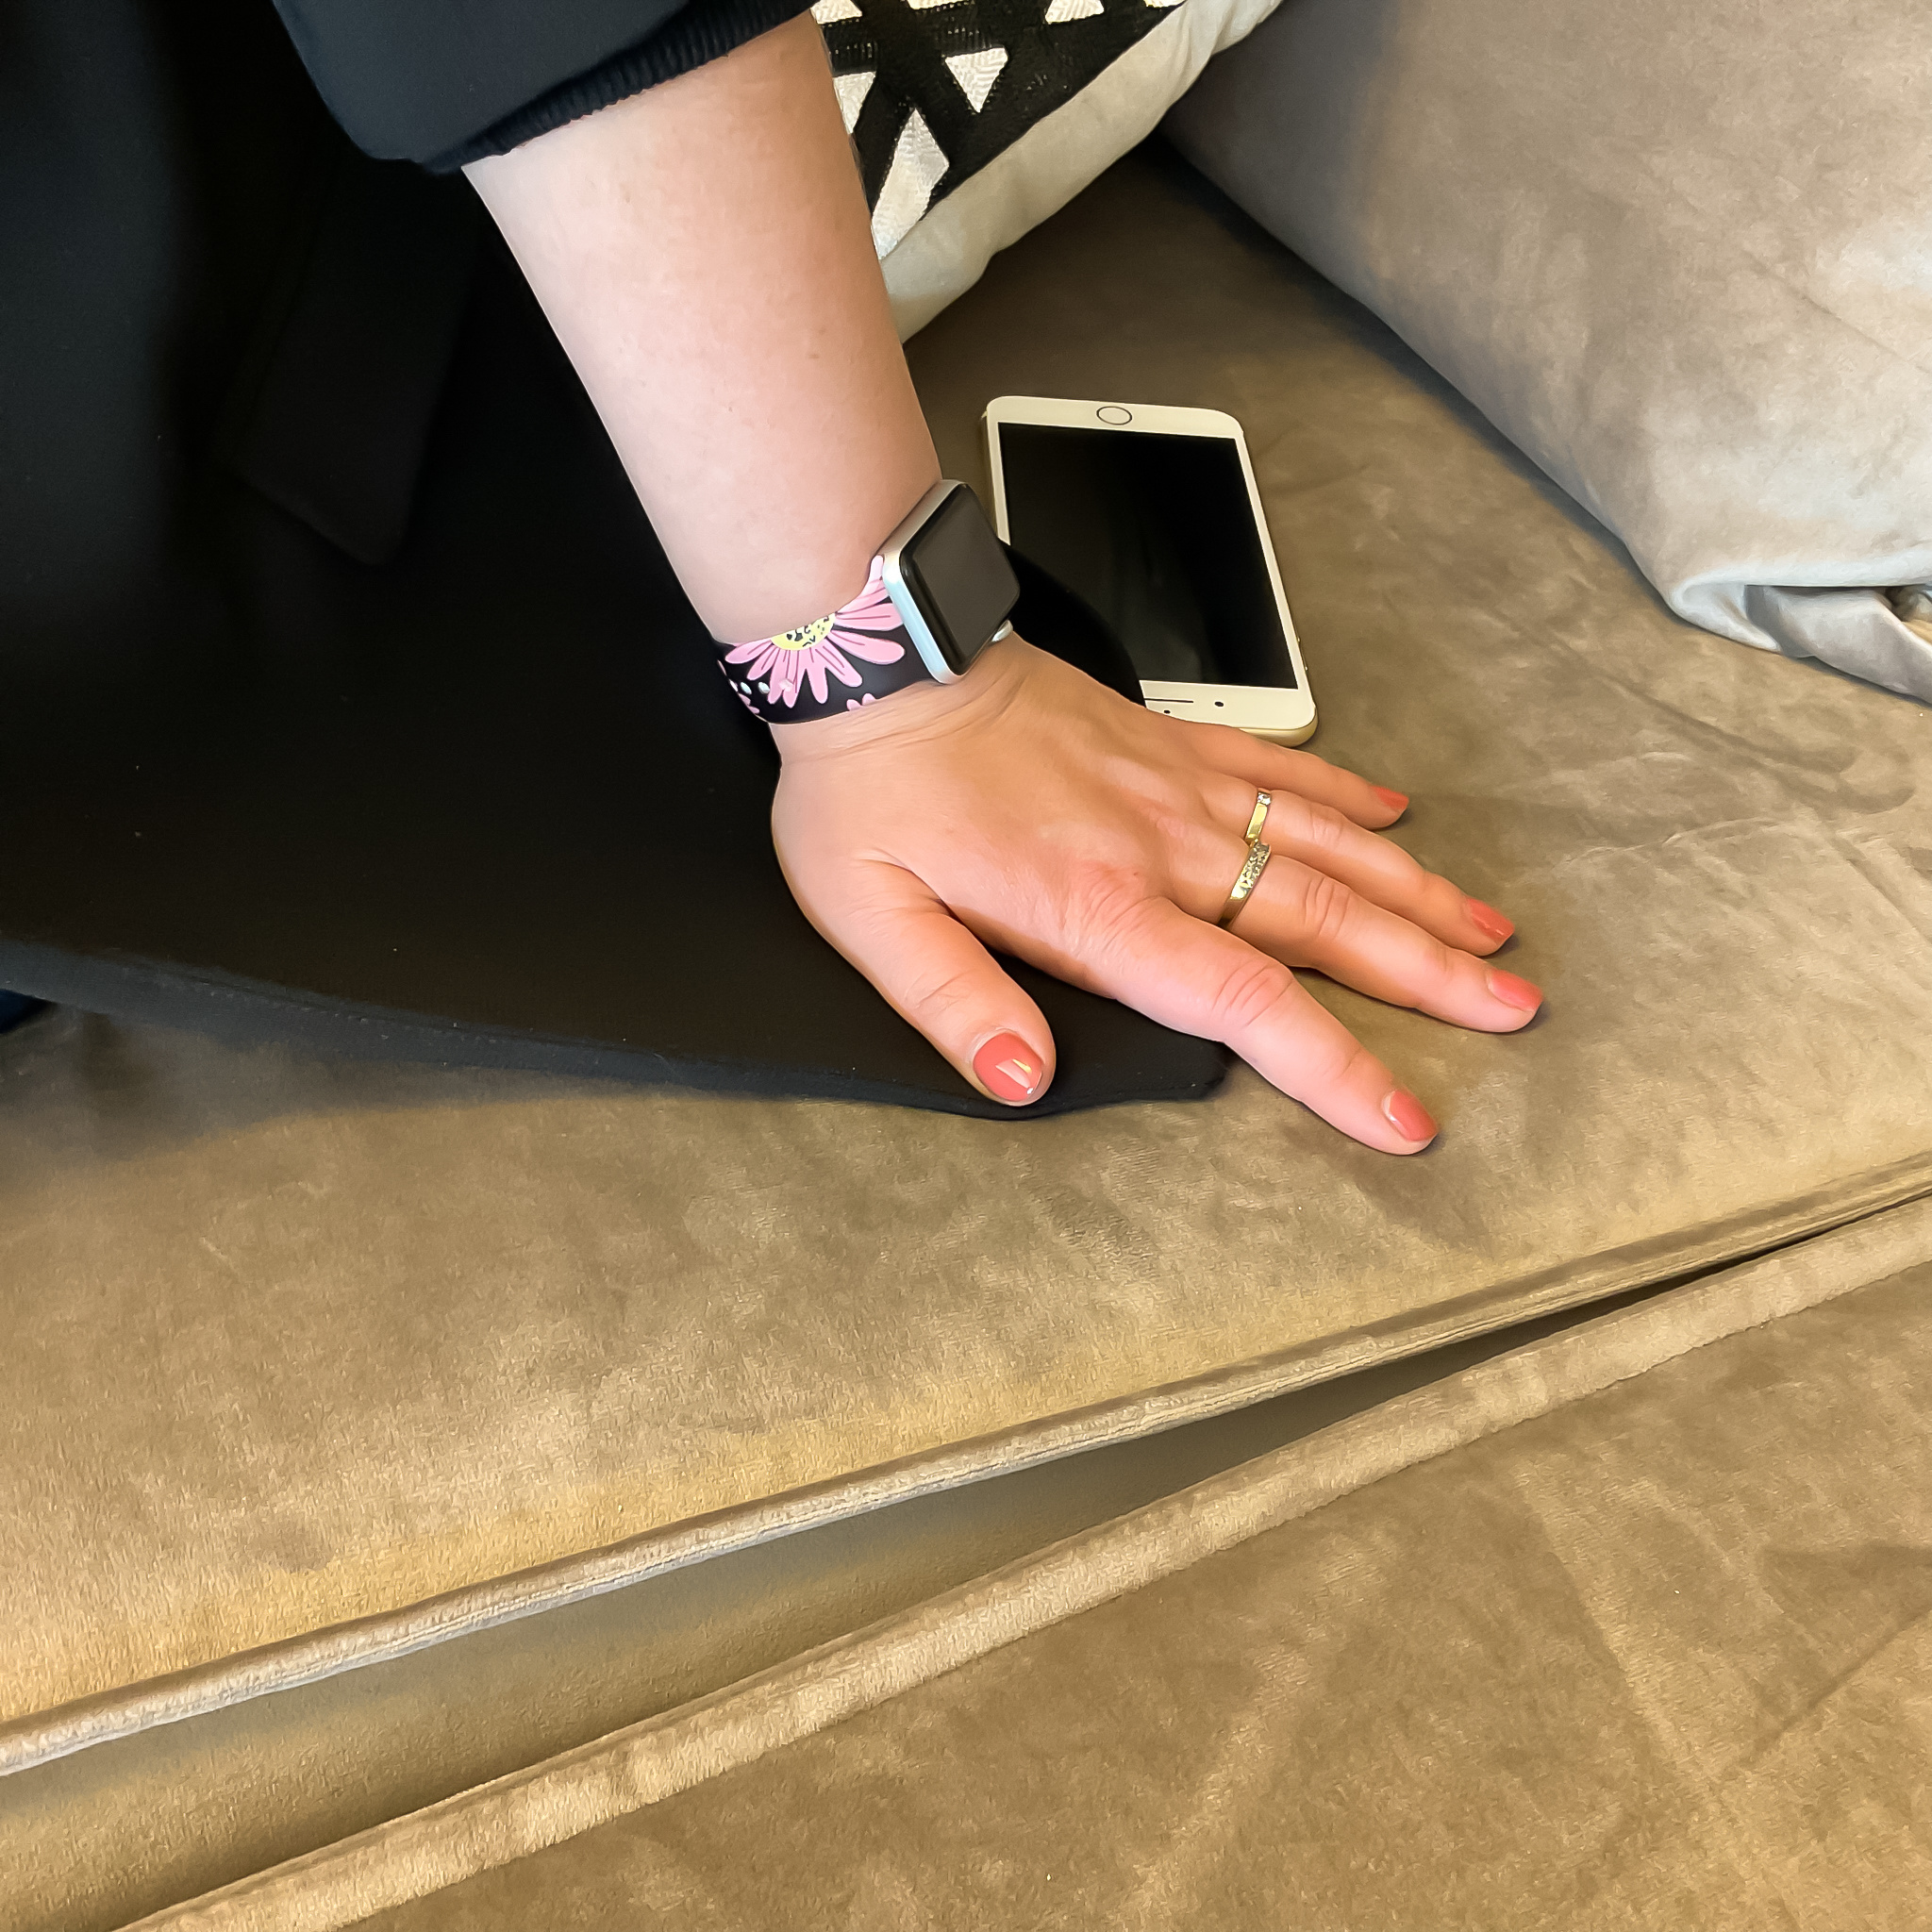 Cinturino sport con stampa per Apple Watch - margherita rosa